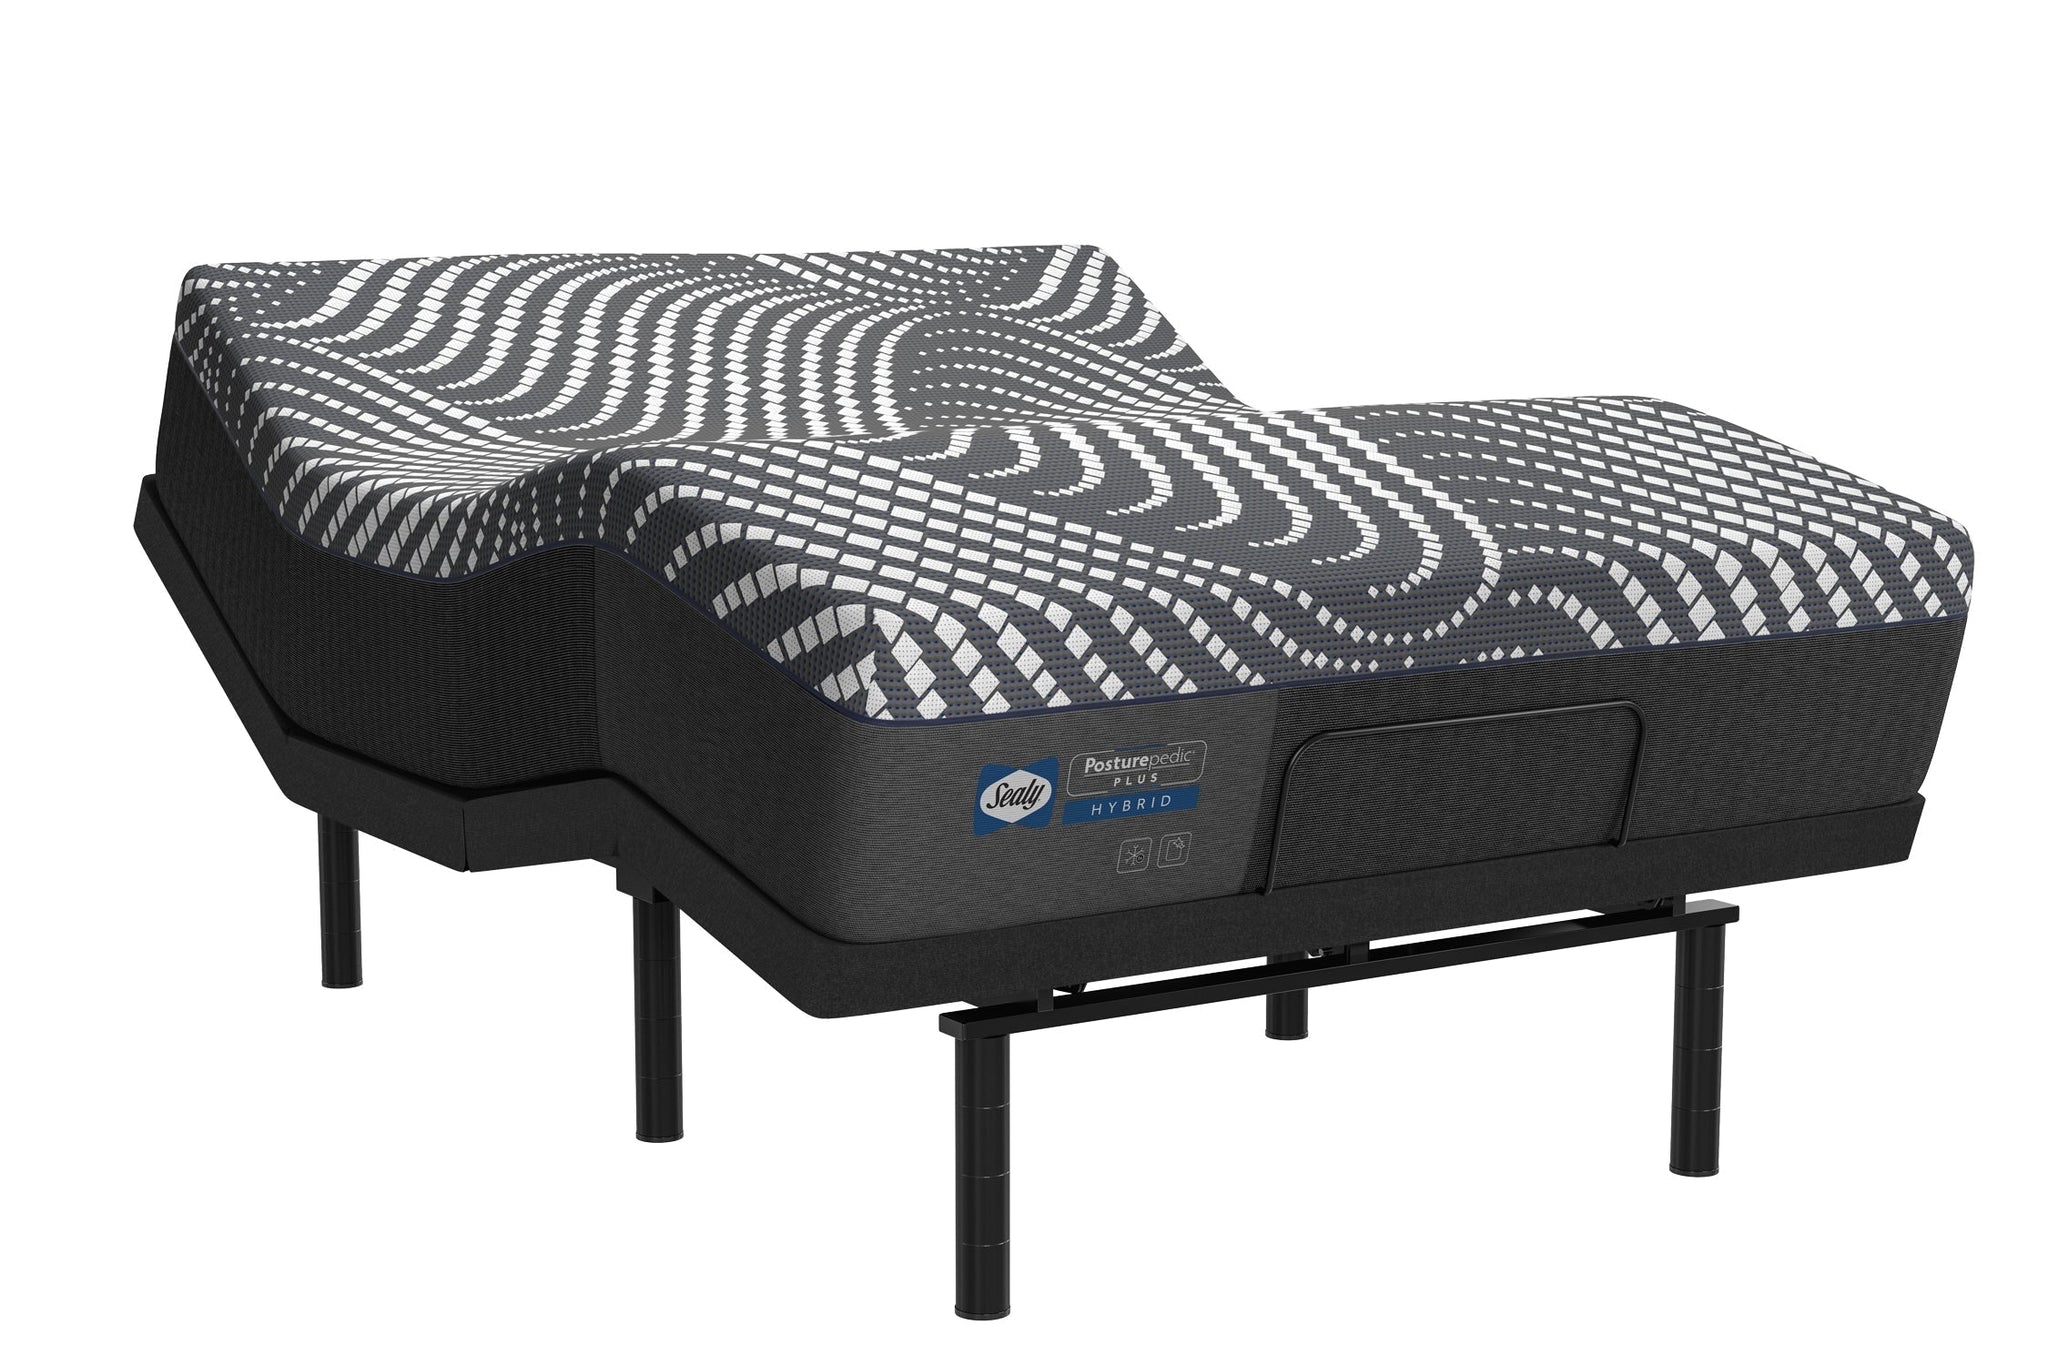 sealy hybrid mattress height